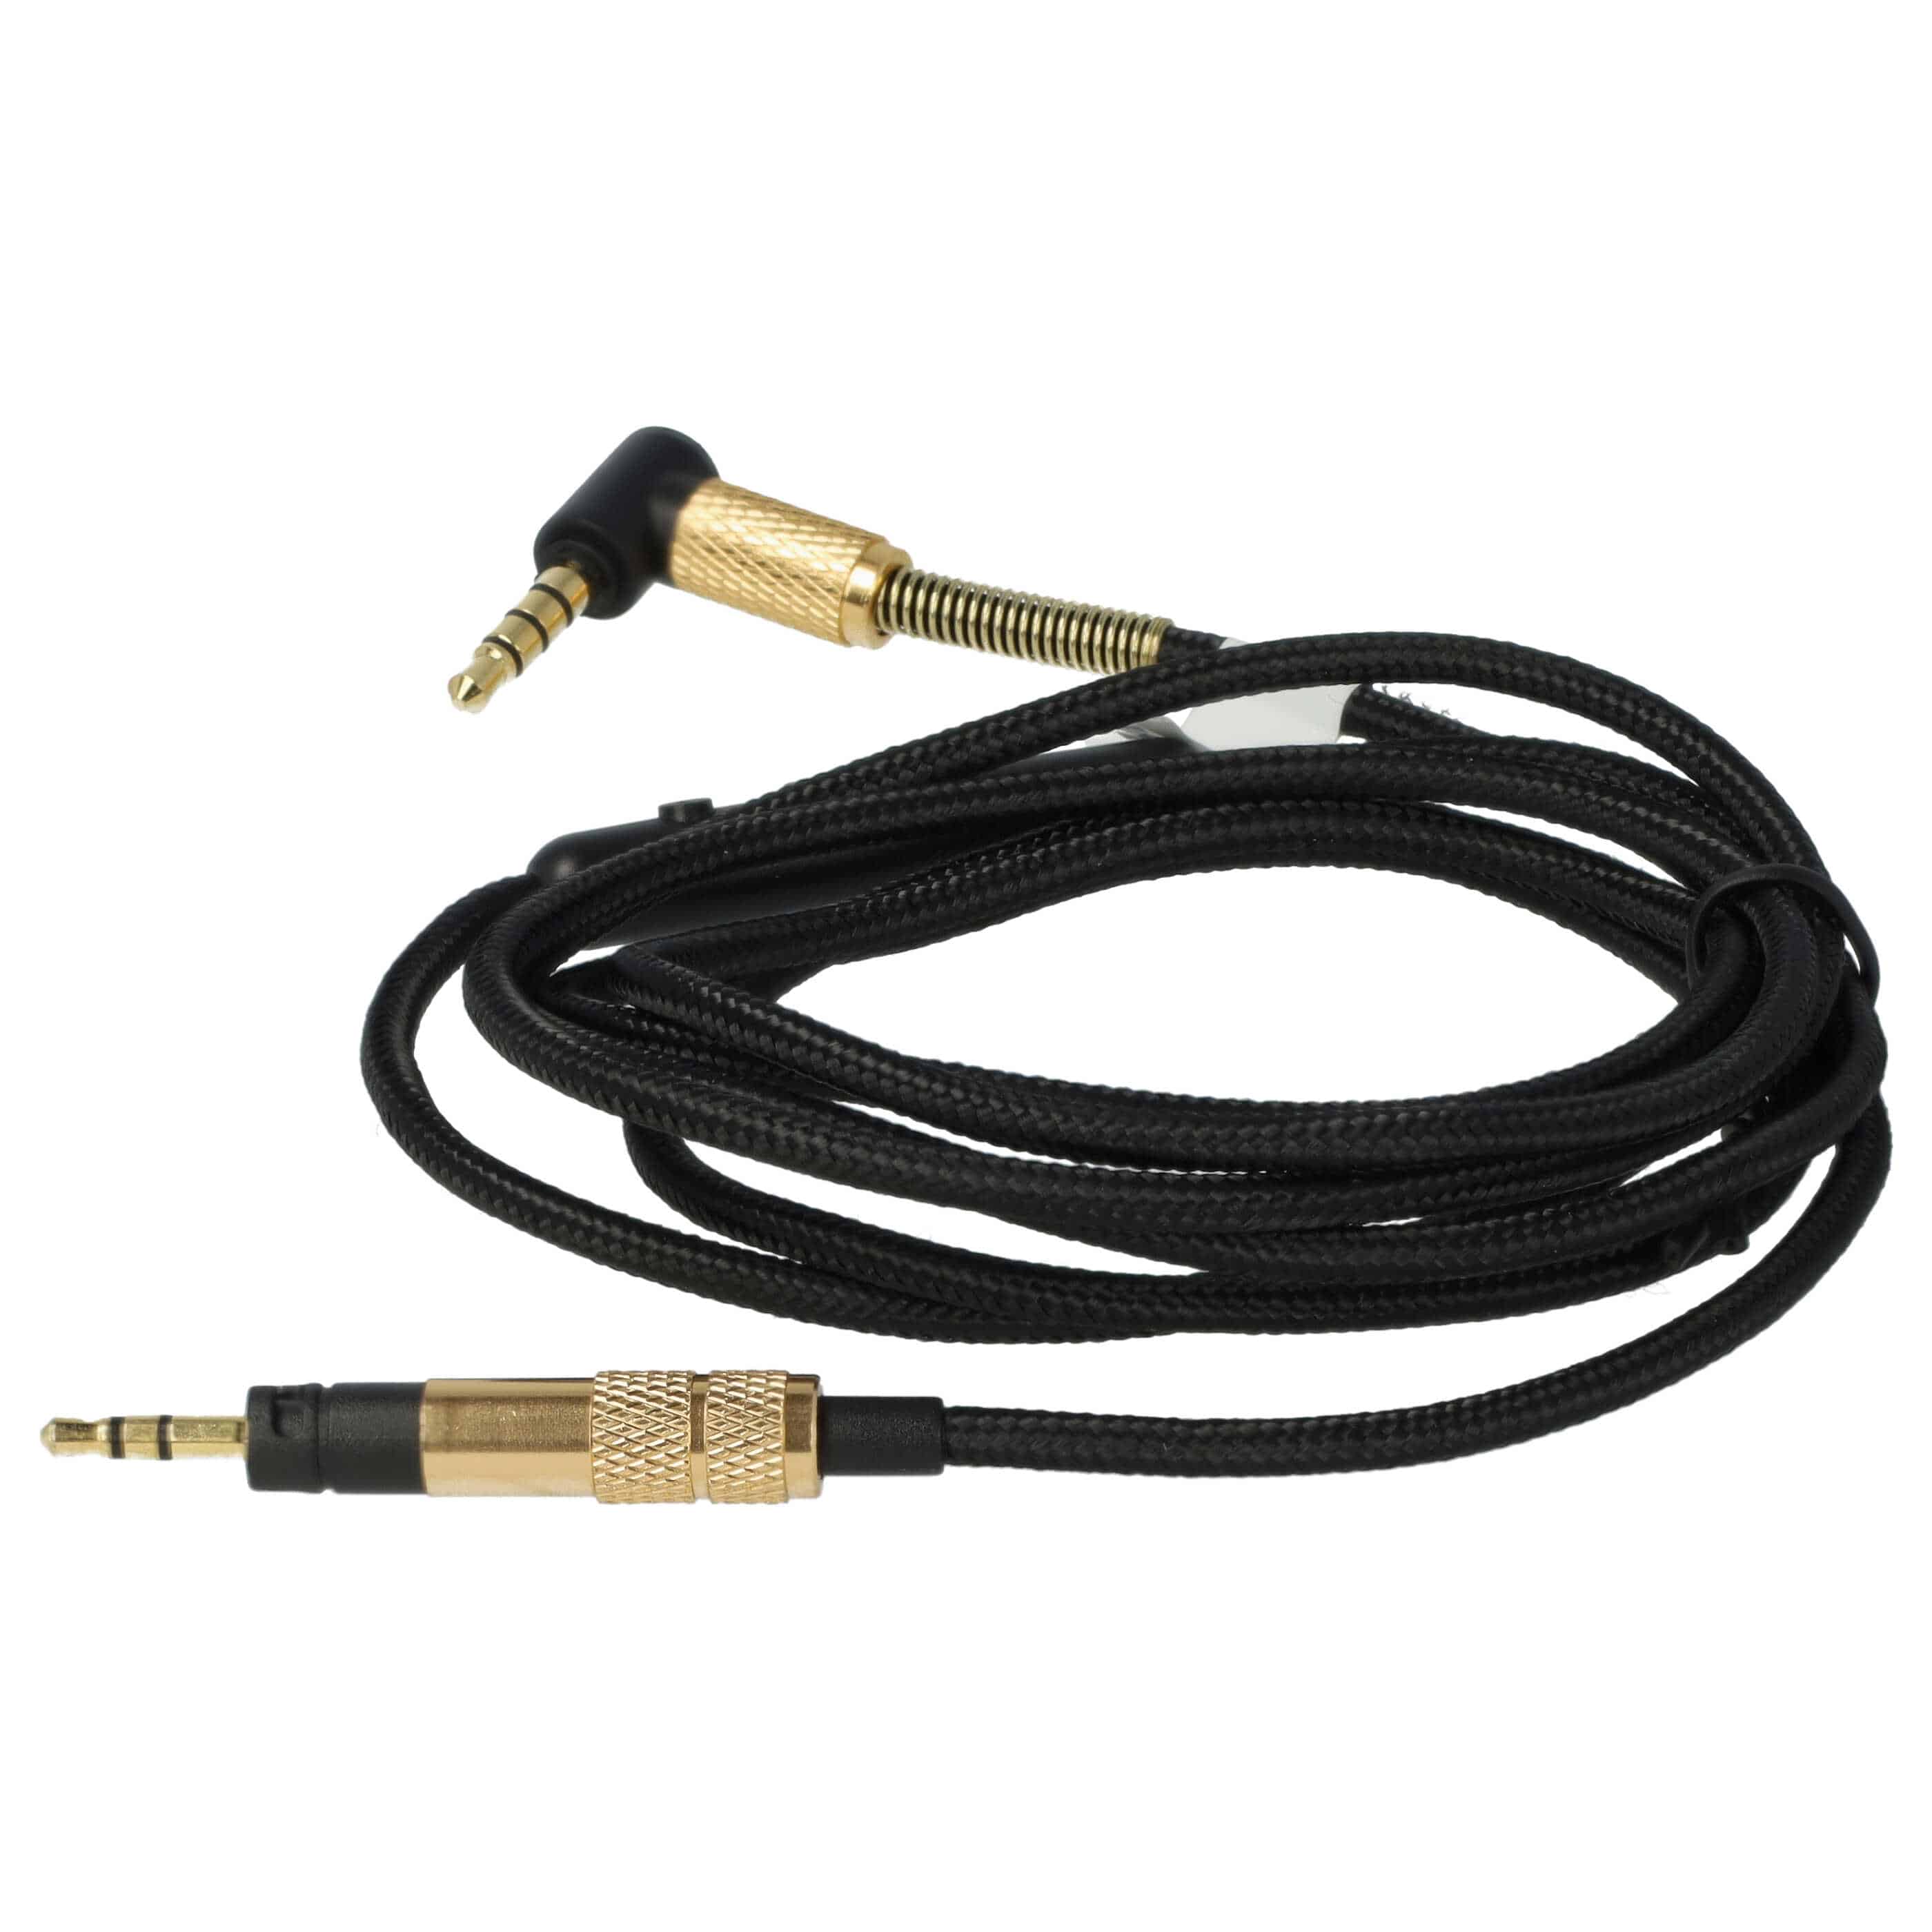 Kabel do słuchawek Sennheiser Momentum 2.0 HD4.30G - czarny, 140 cm